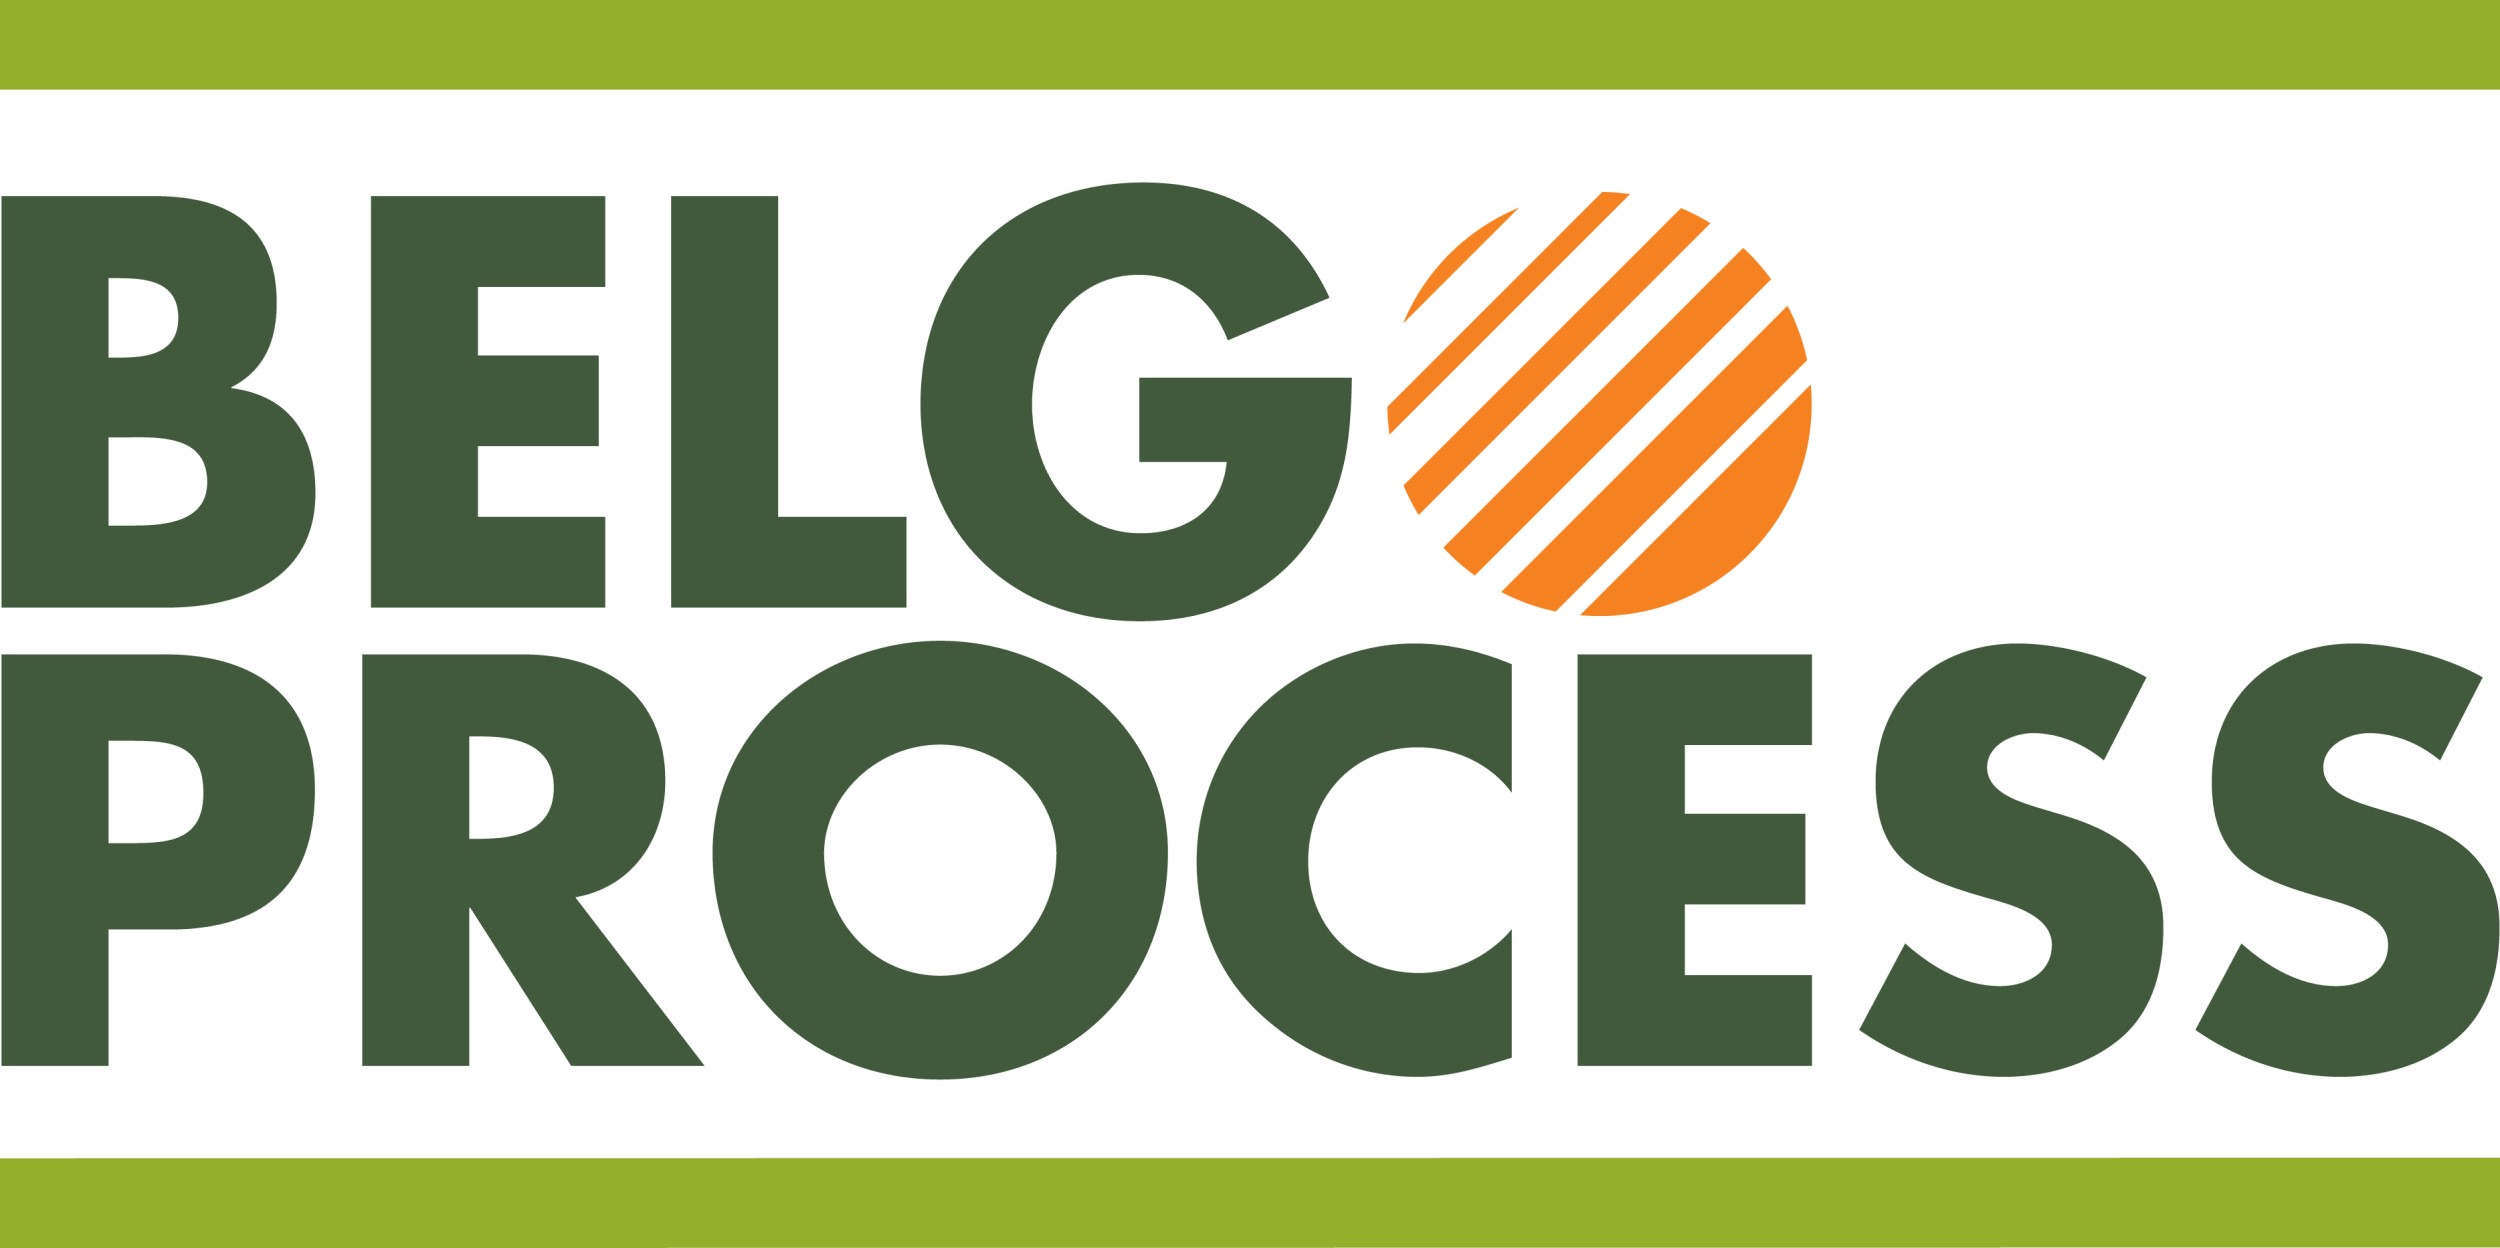 Belgoprocess_logo (kleiner)